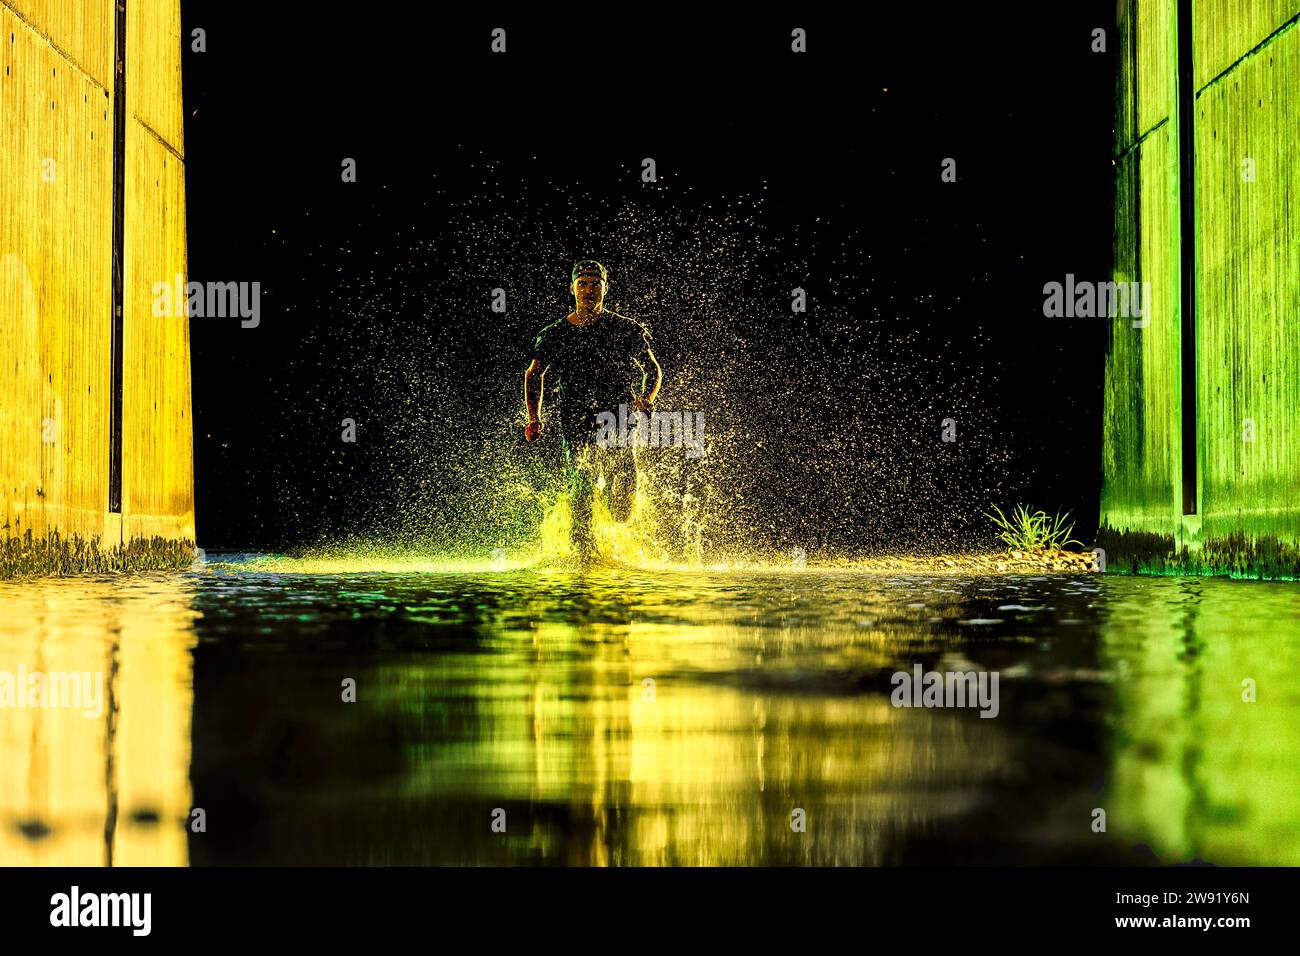 Man running in river water with neon lights under bridge Stock Photo